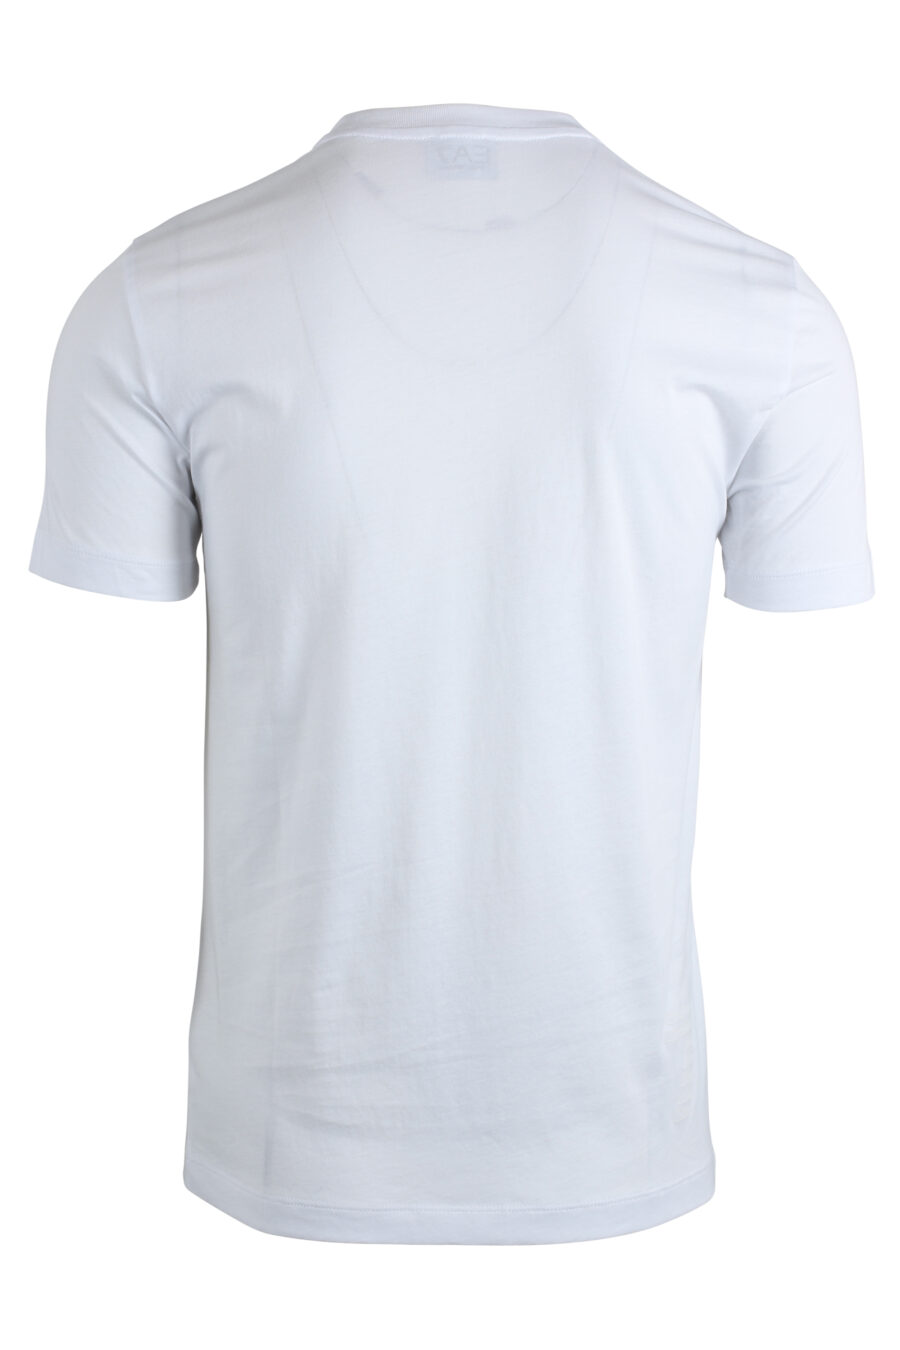 Weißes T-Shirt mit silbernem Maxilogo aus Gummi - IMG 4792